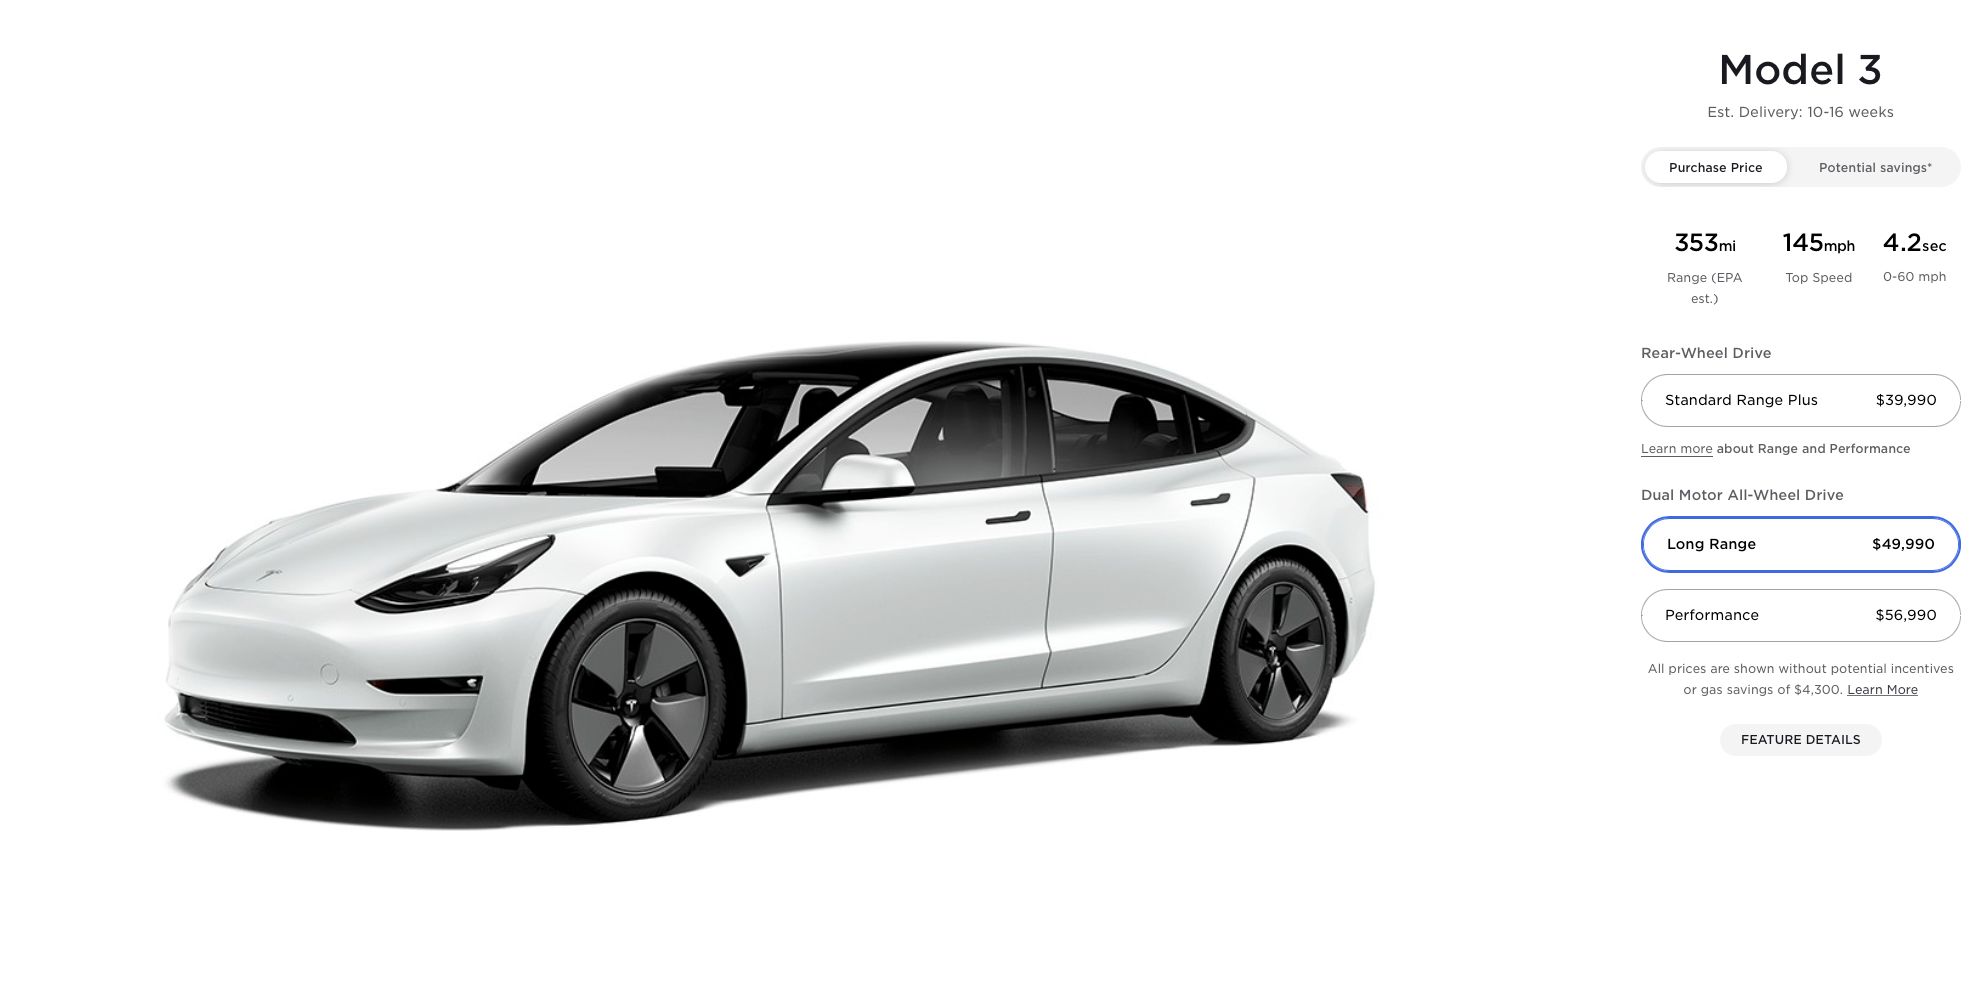 Tesla Model 3 price as of July 2021